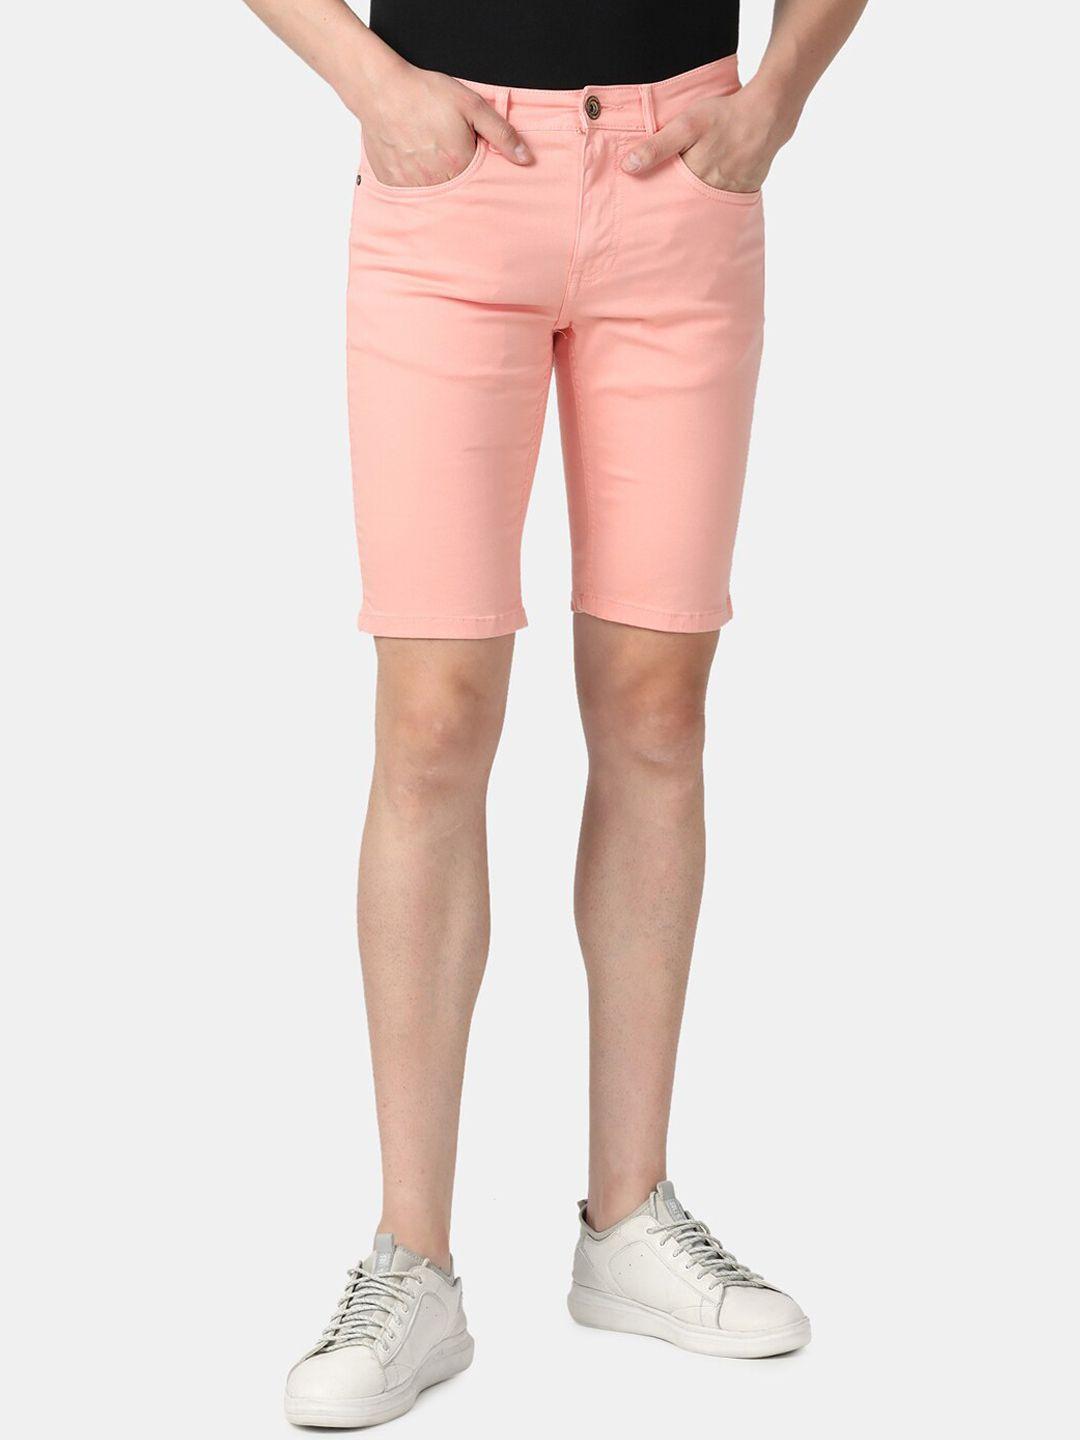 llak jeans men peach-coloured slim fit denim shorts